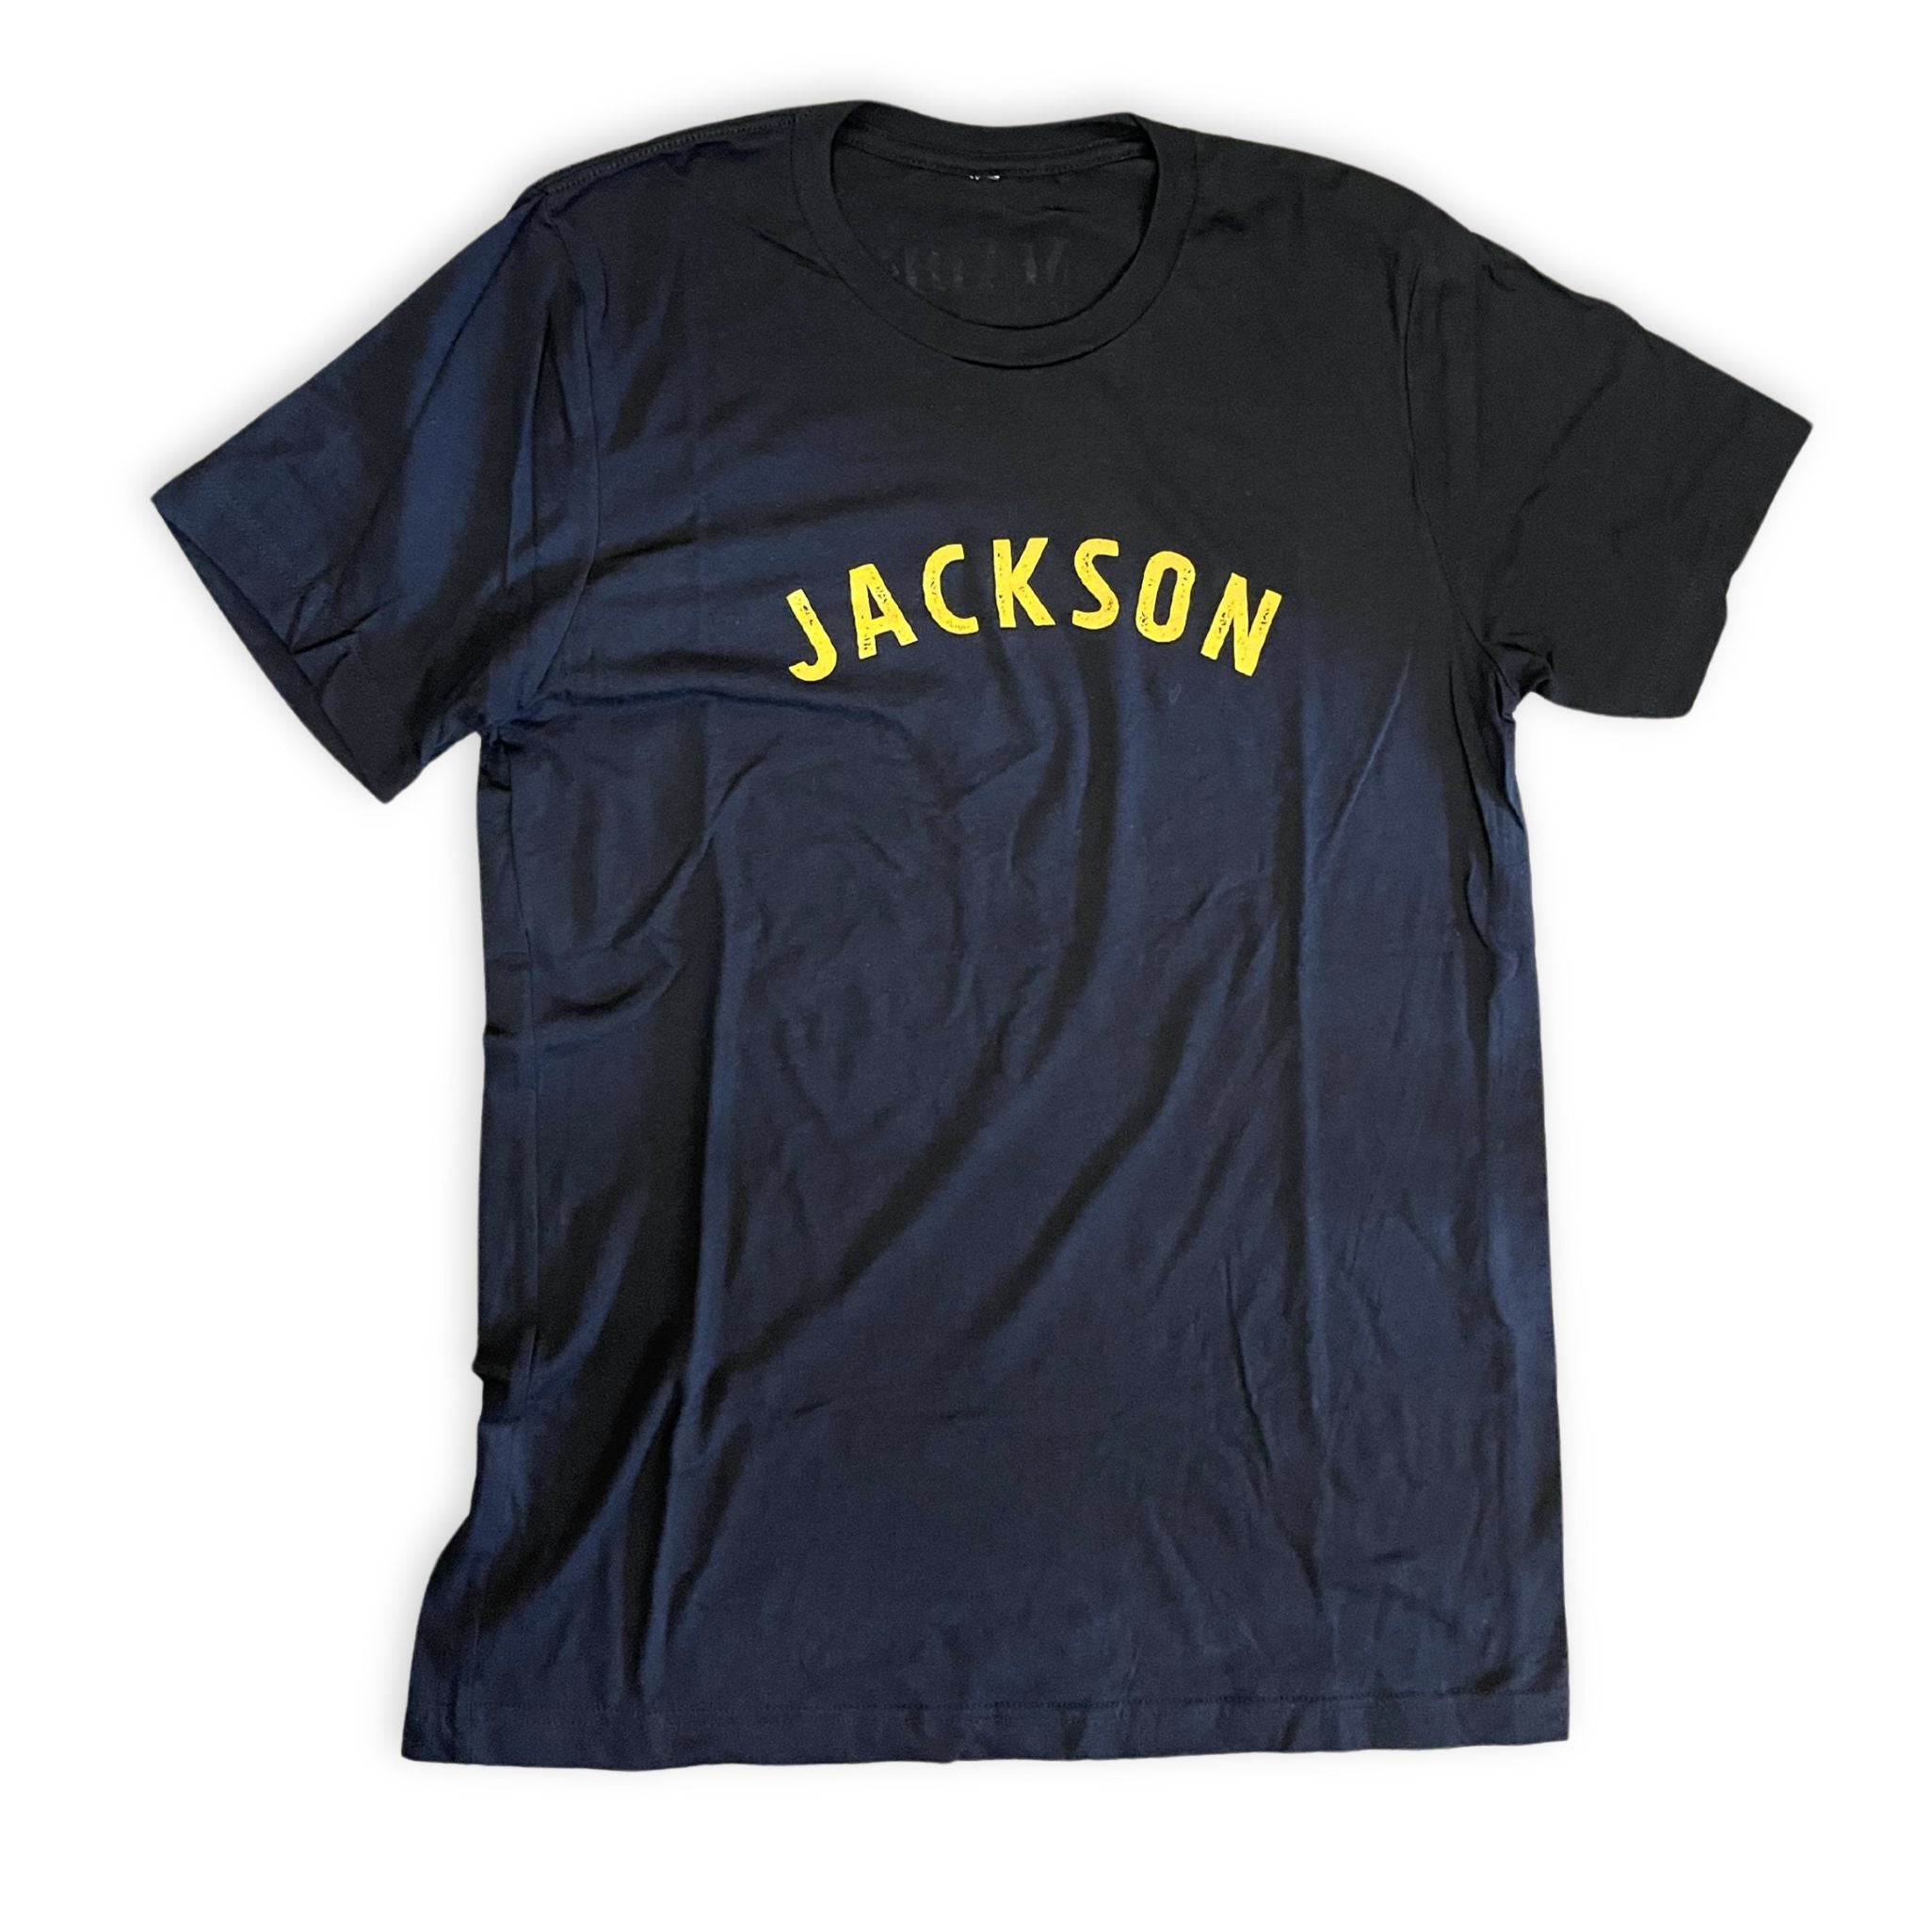 Jackson Shirt - Black